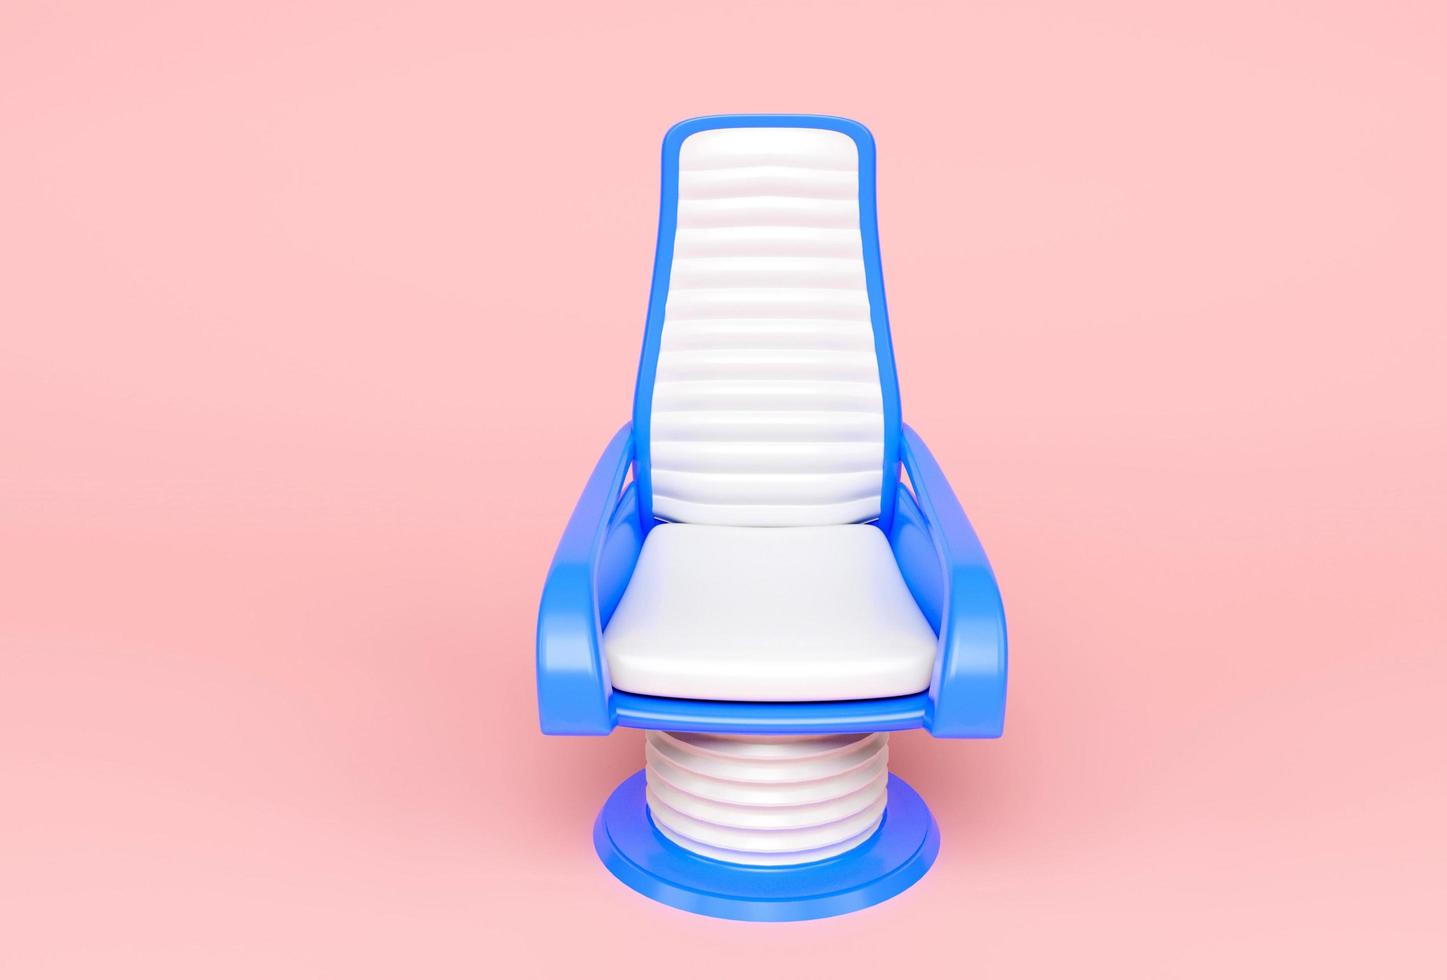 Capitan Pilot Chair 3d illustration minimal rendering on Pink background photo